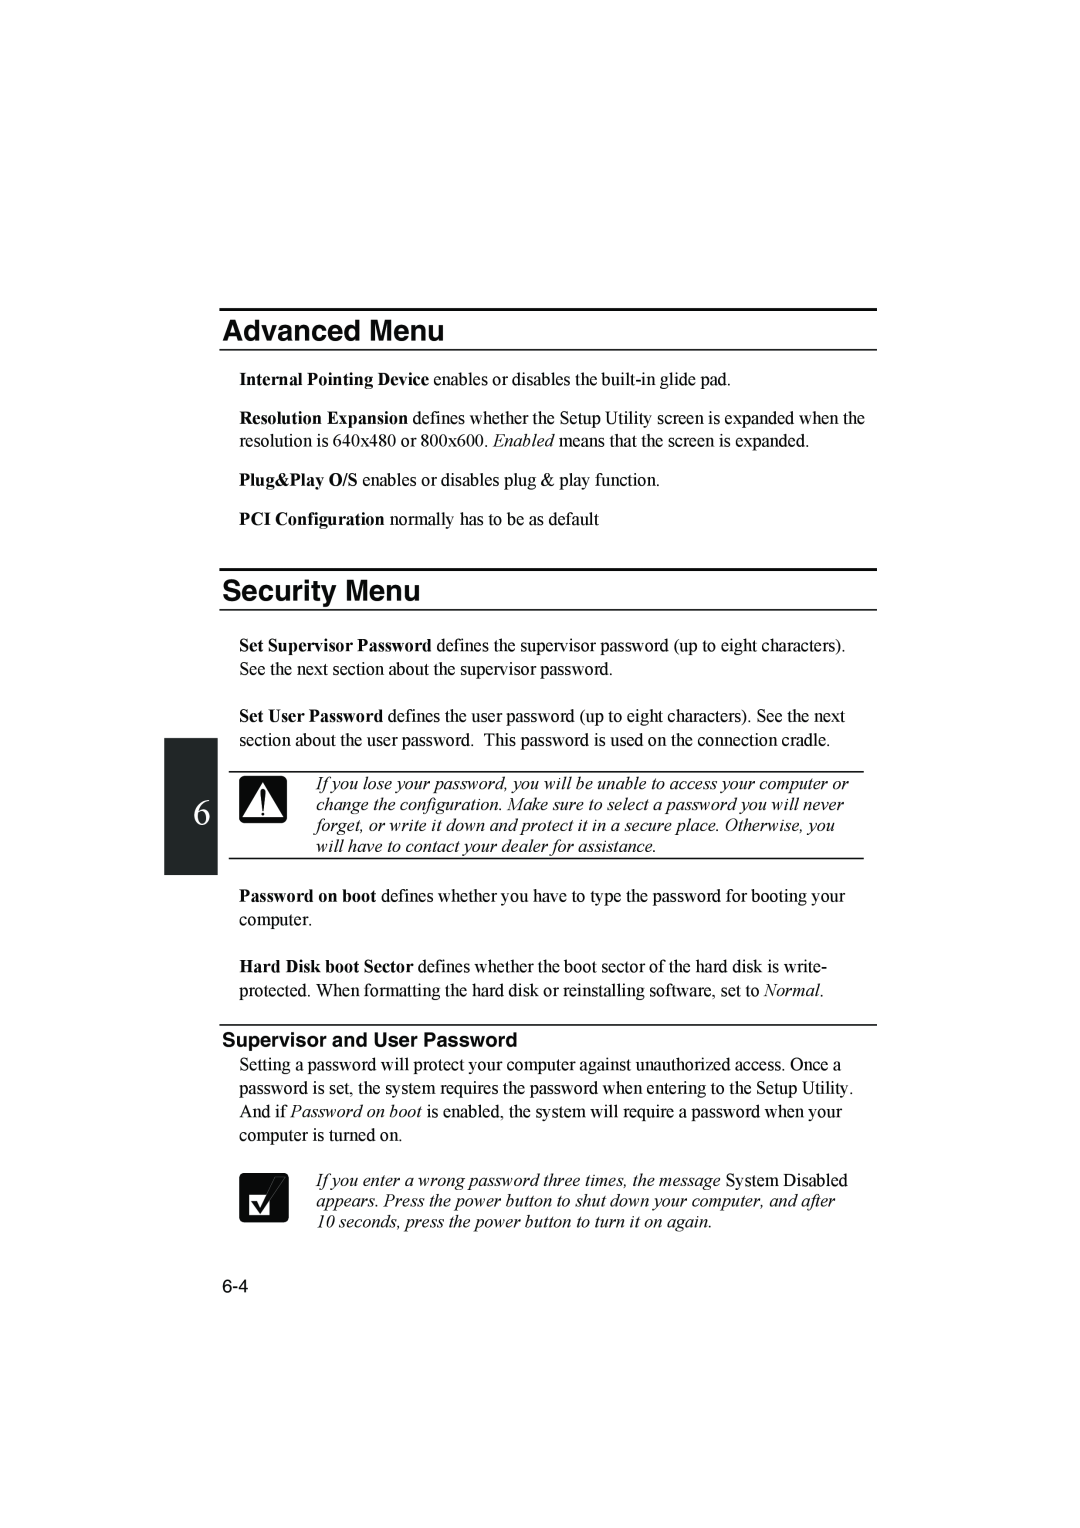 Sharp PC-MM1 manual Advanced Menu, Security Menu, Supervisor and User Password 